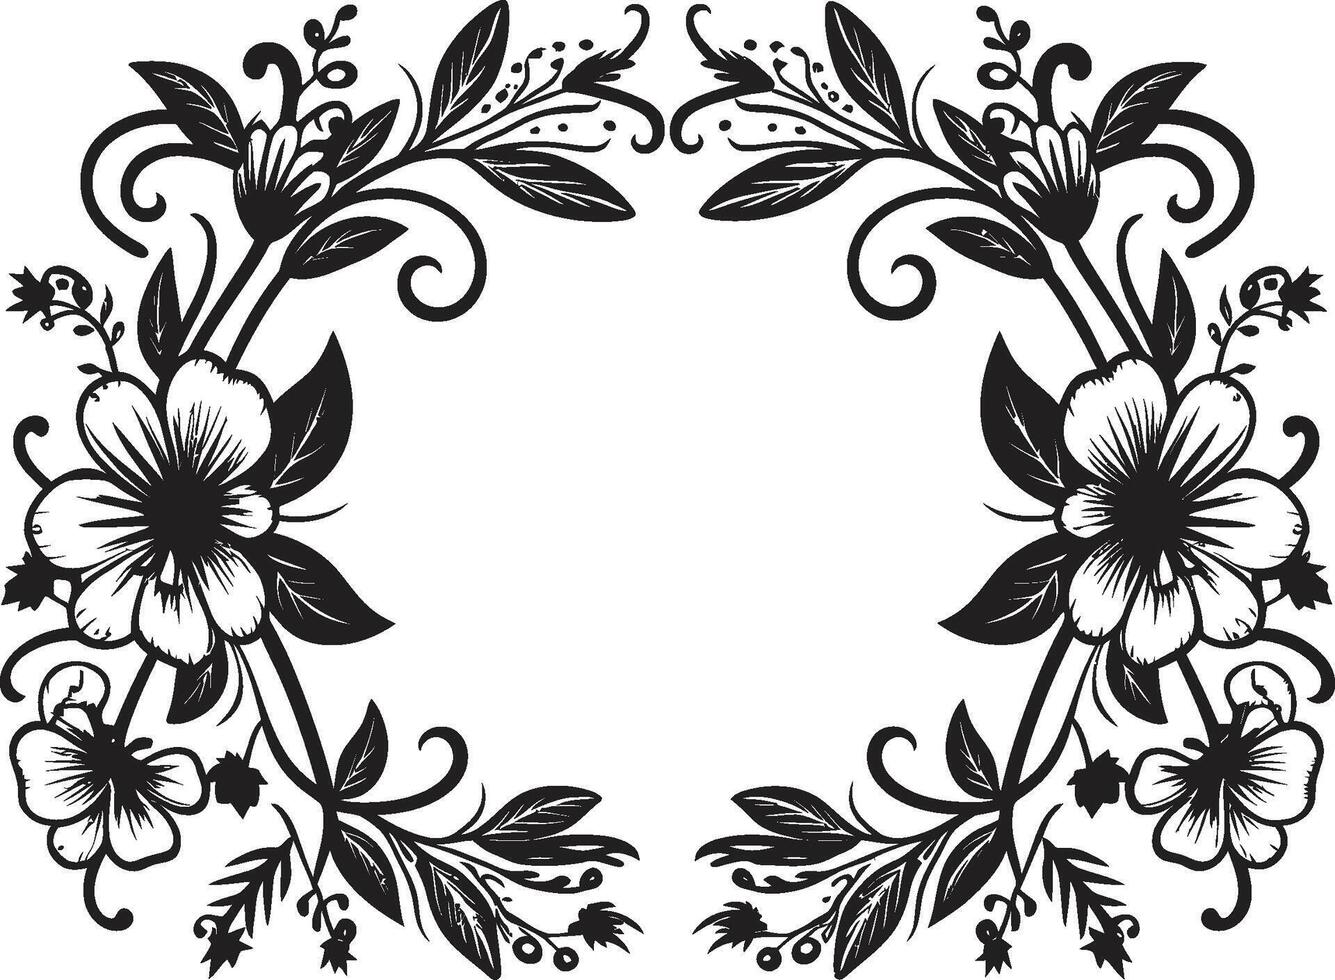 Fanciful Flourishes Stylish Vector Icon Featuring Doodle Decorative Frame Elements Sophisticated Swirls Black Emblem with Monochrome Doodle Decorative Frame